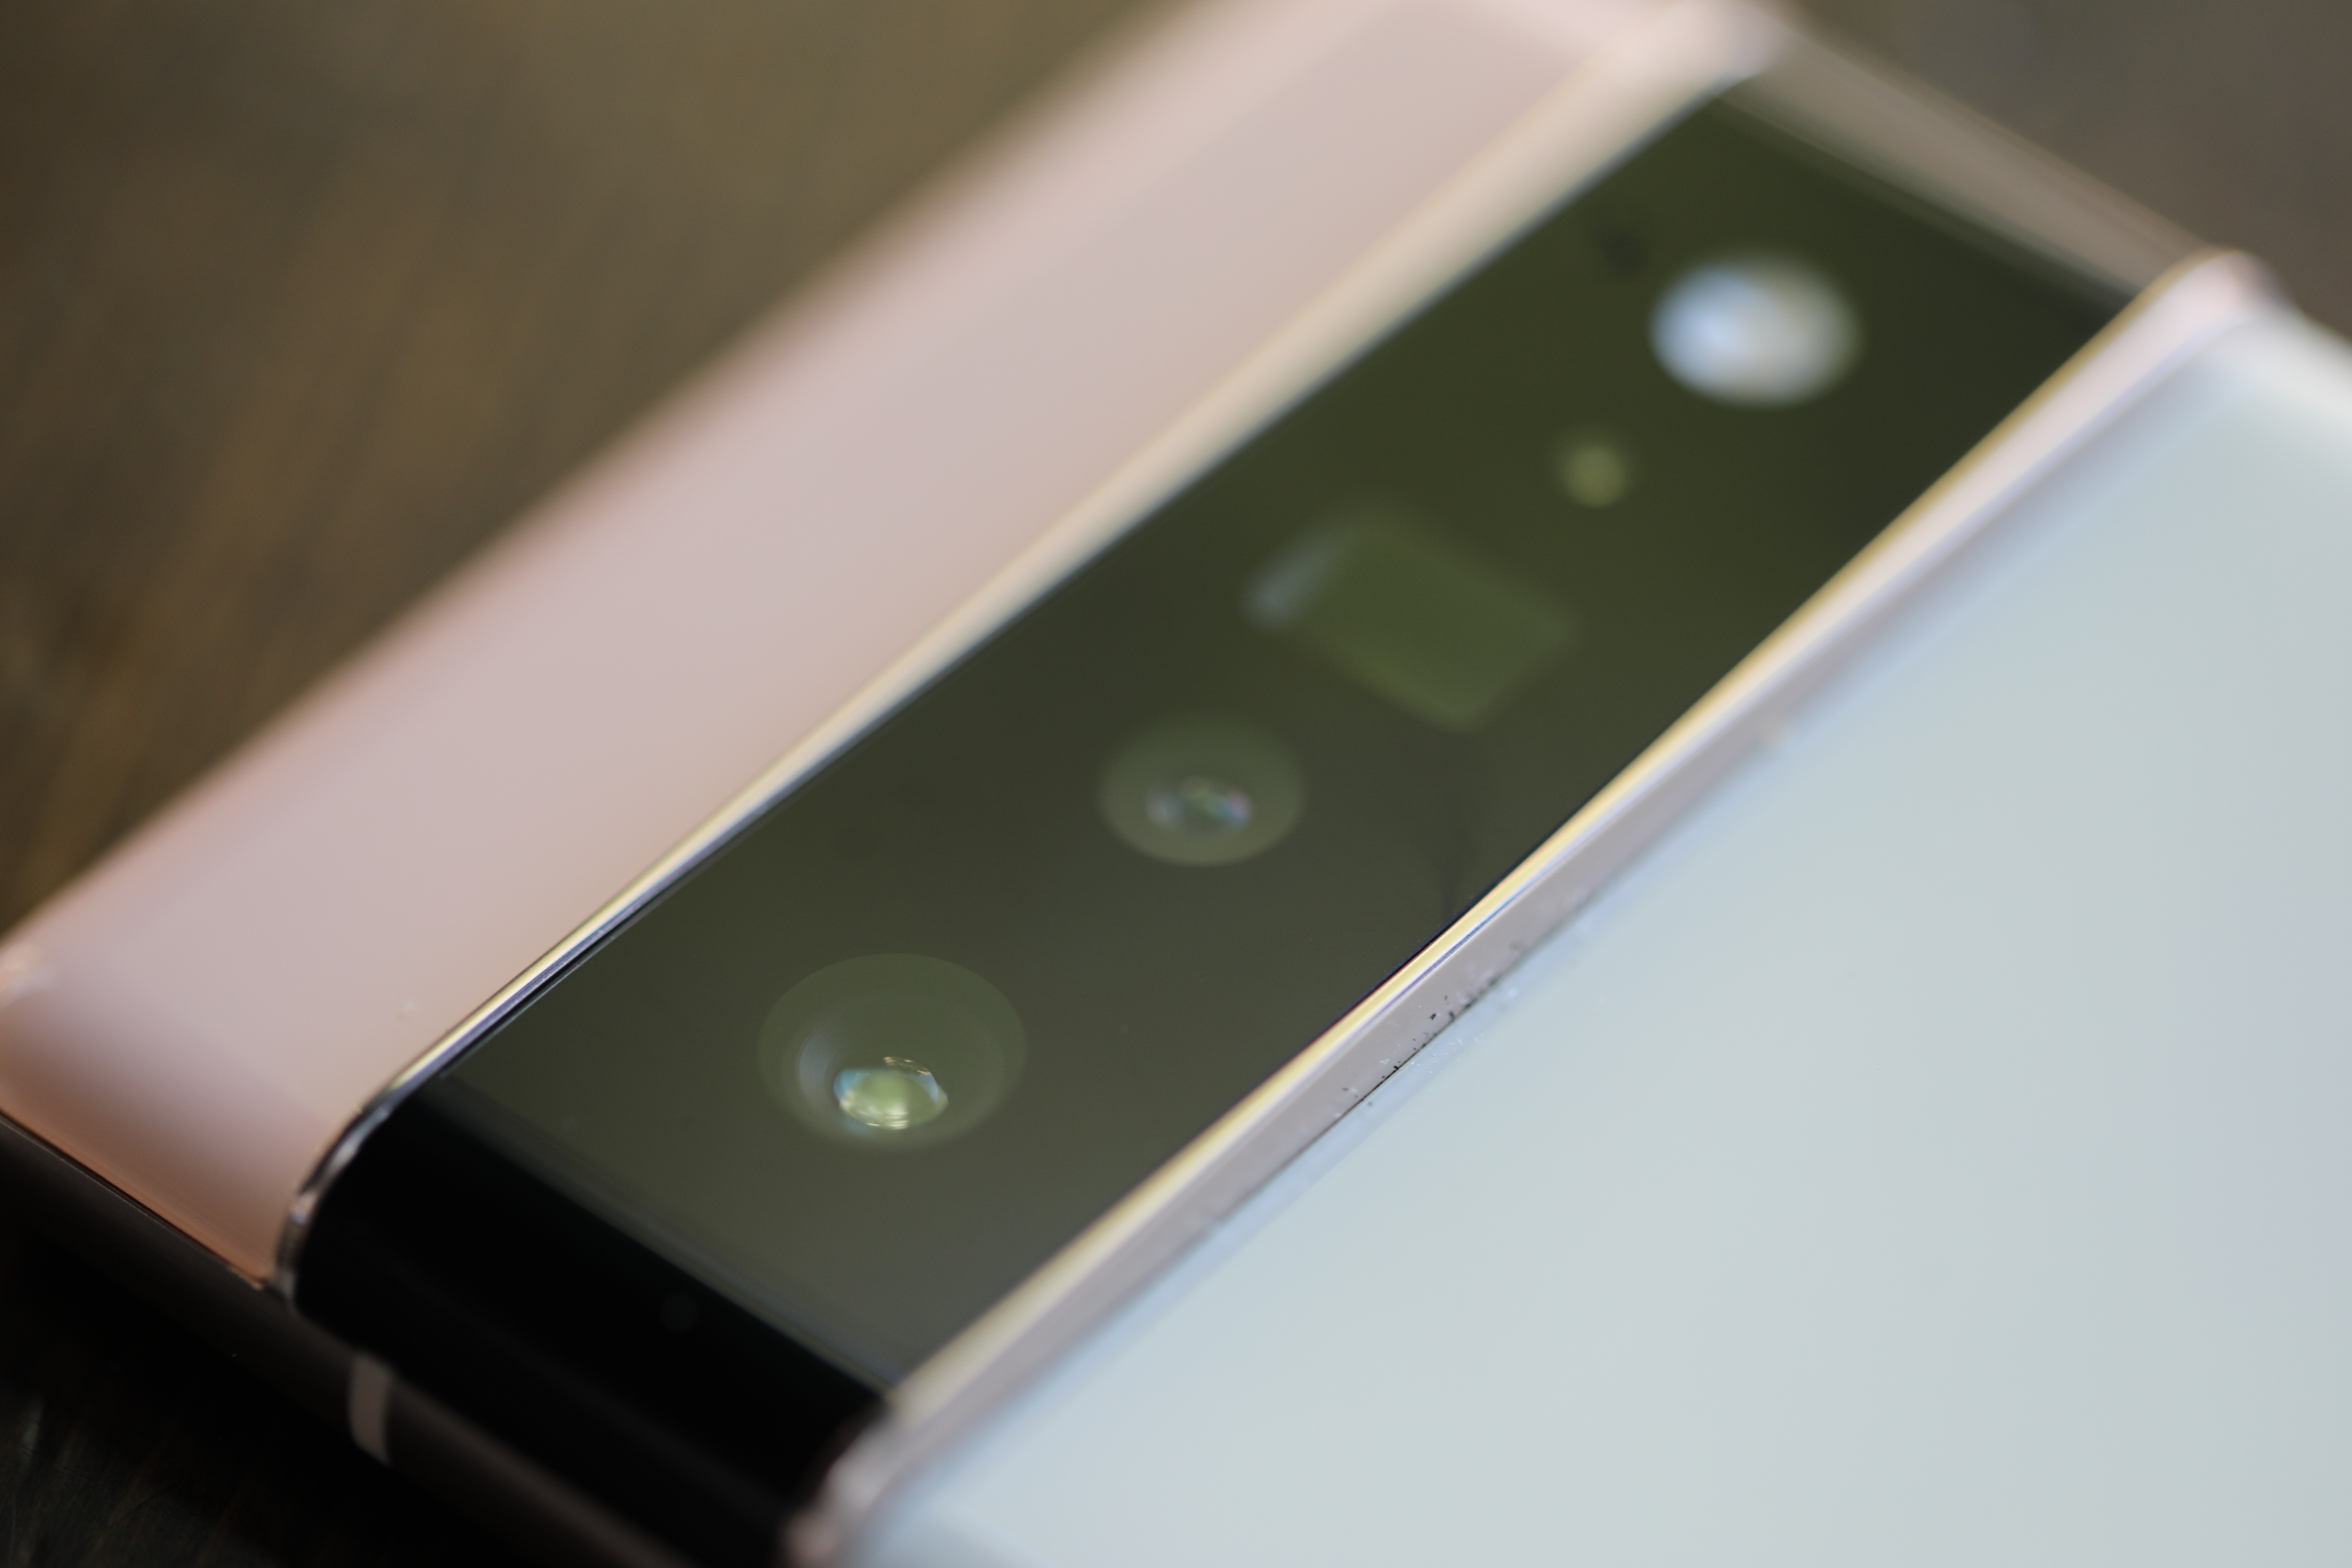 Google's Pixel 6 camera smartens up snapshots with AI tools | TechCrunch